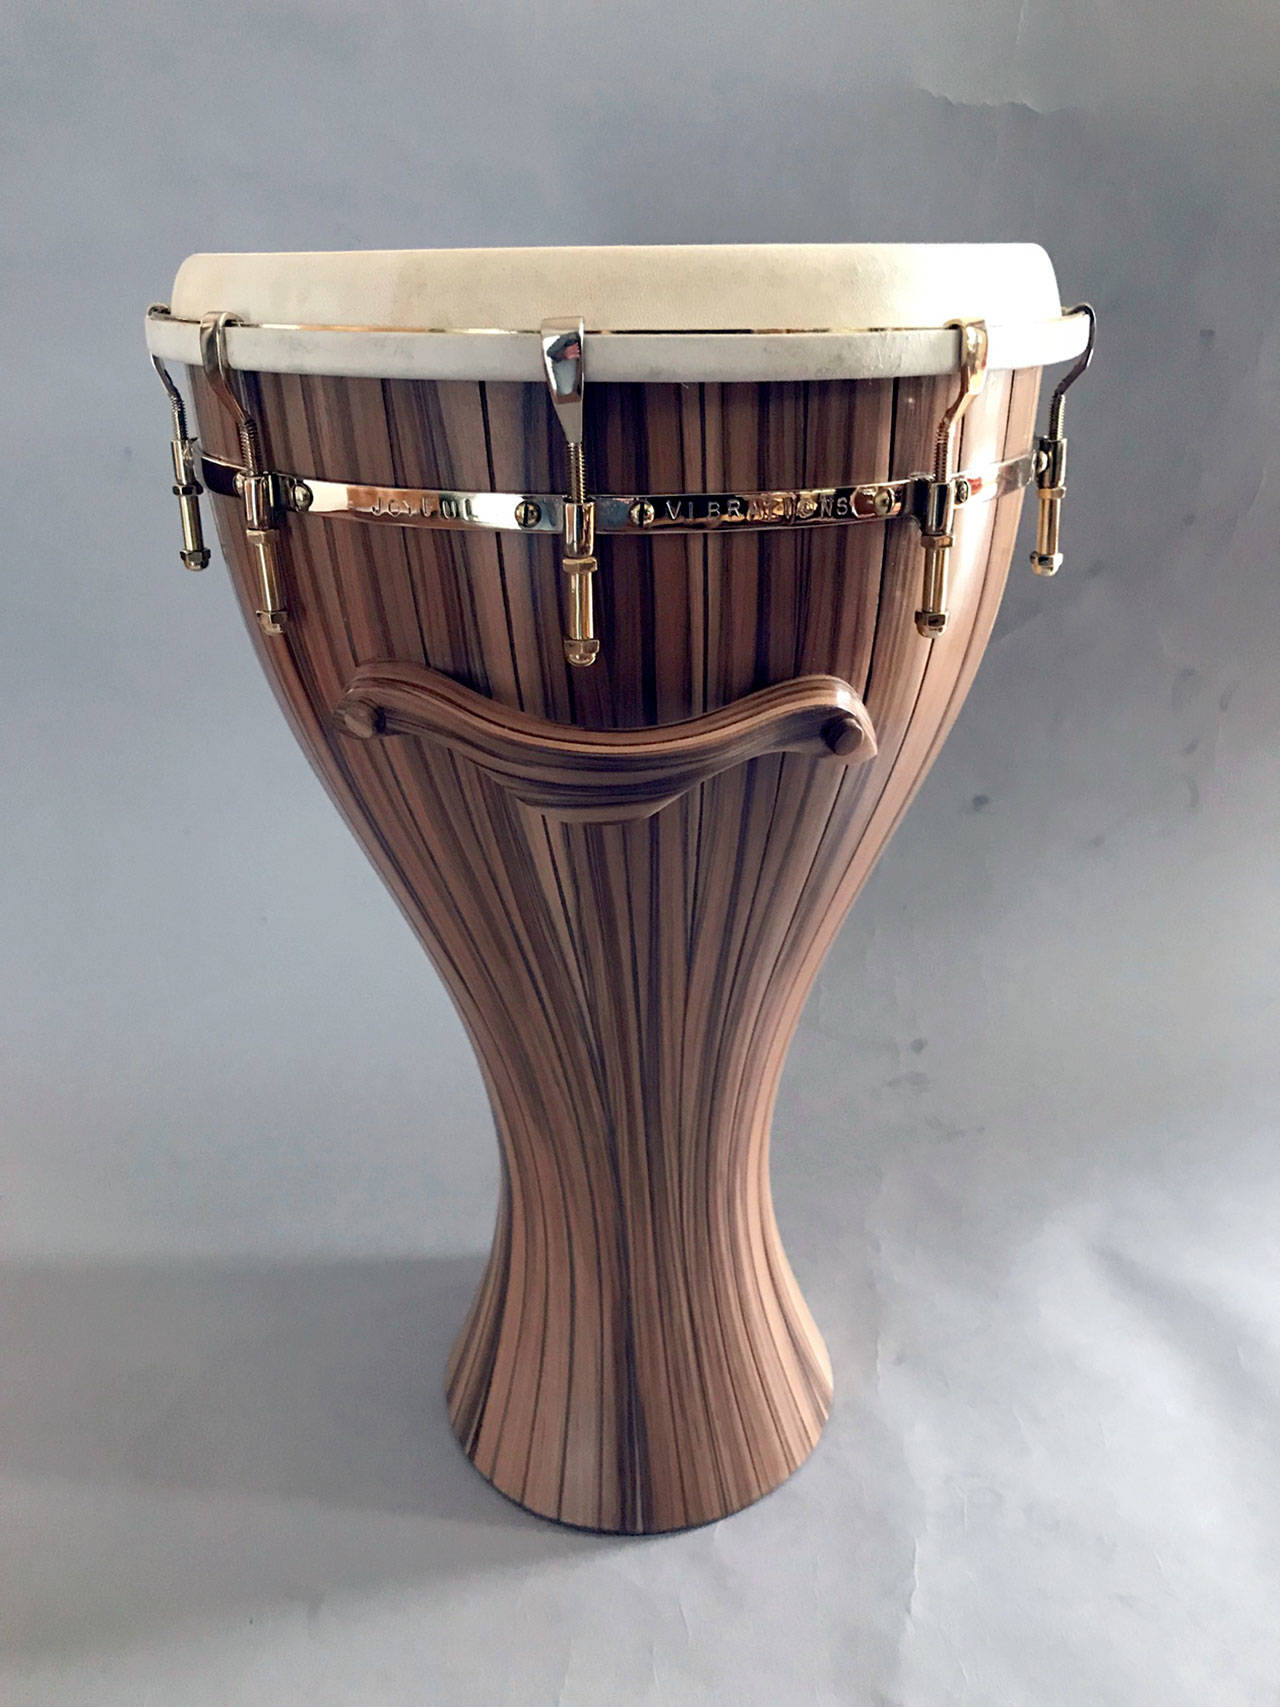 Hand drum maker Tom Stewart’s 194th drum will be displayed in Gallery 9, 1012 Water St., Saturday for Port Townsend’s Gallery Walk. (Tom Stewart)